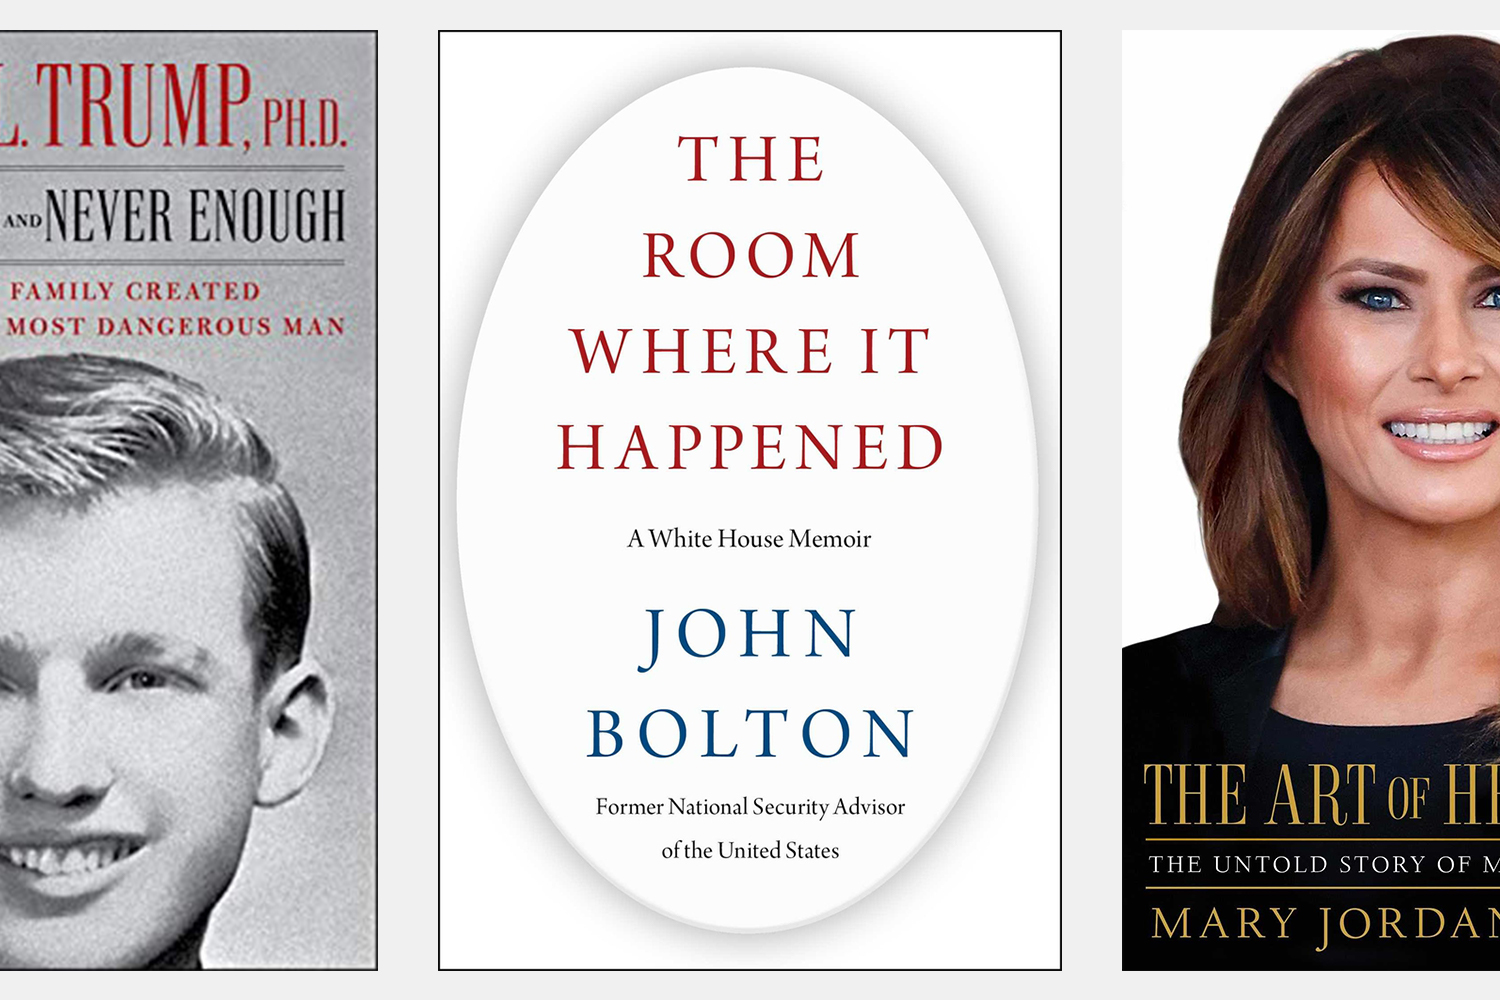 Donald Trump books from Simon & Schuster by Mary Trump, John Bolton and Mary Jordan